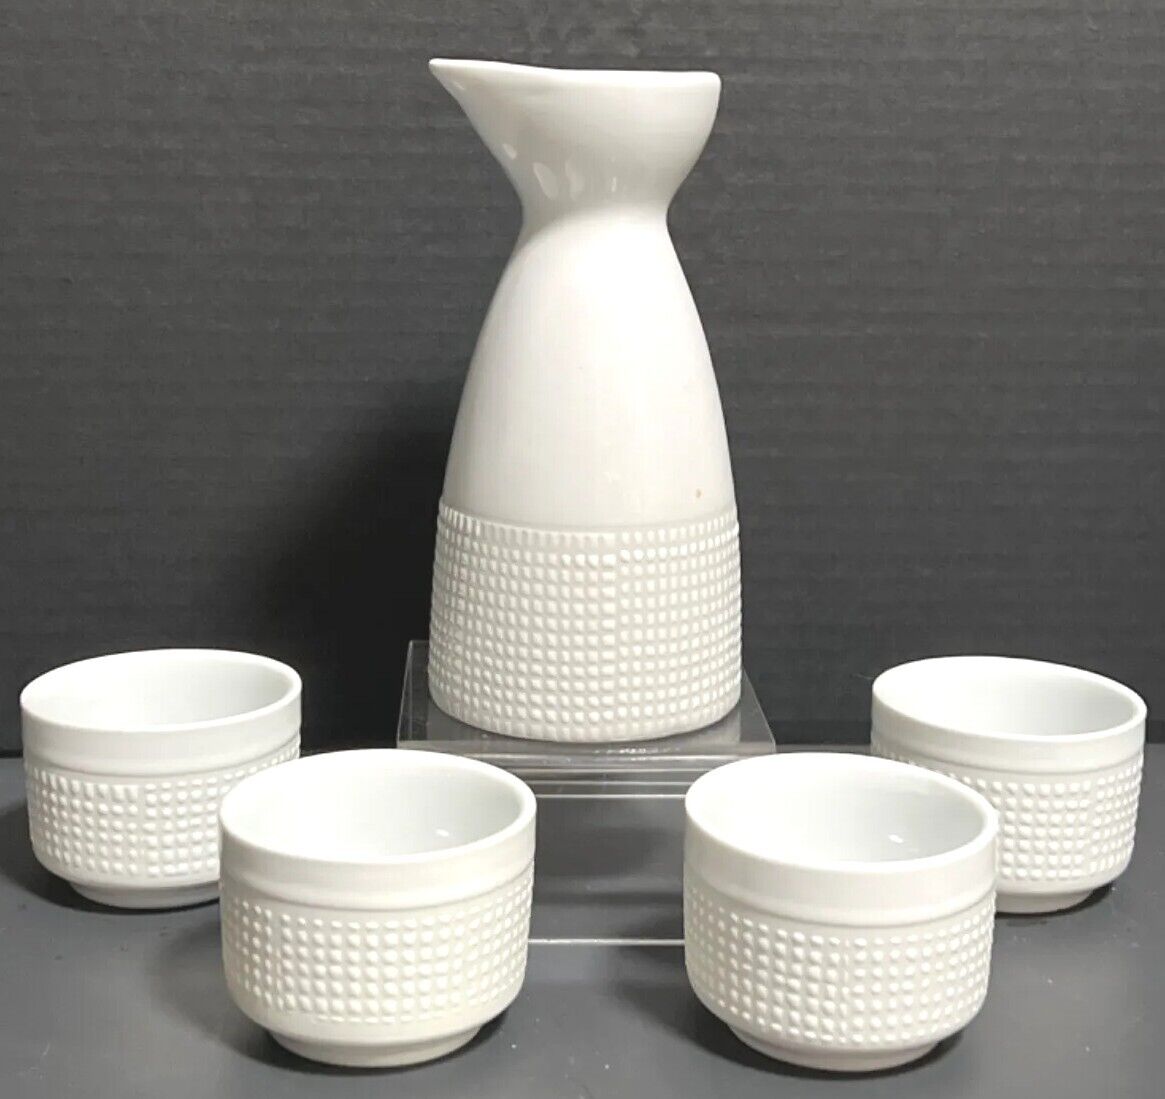 Sake Set of 5 Piece White Porcelain, Textured Surface from World Market Vintage